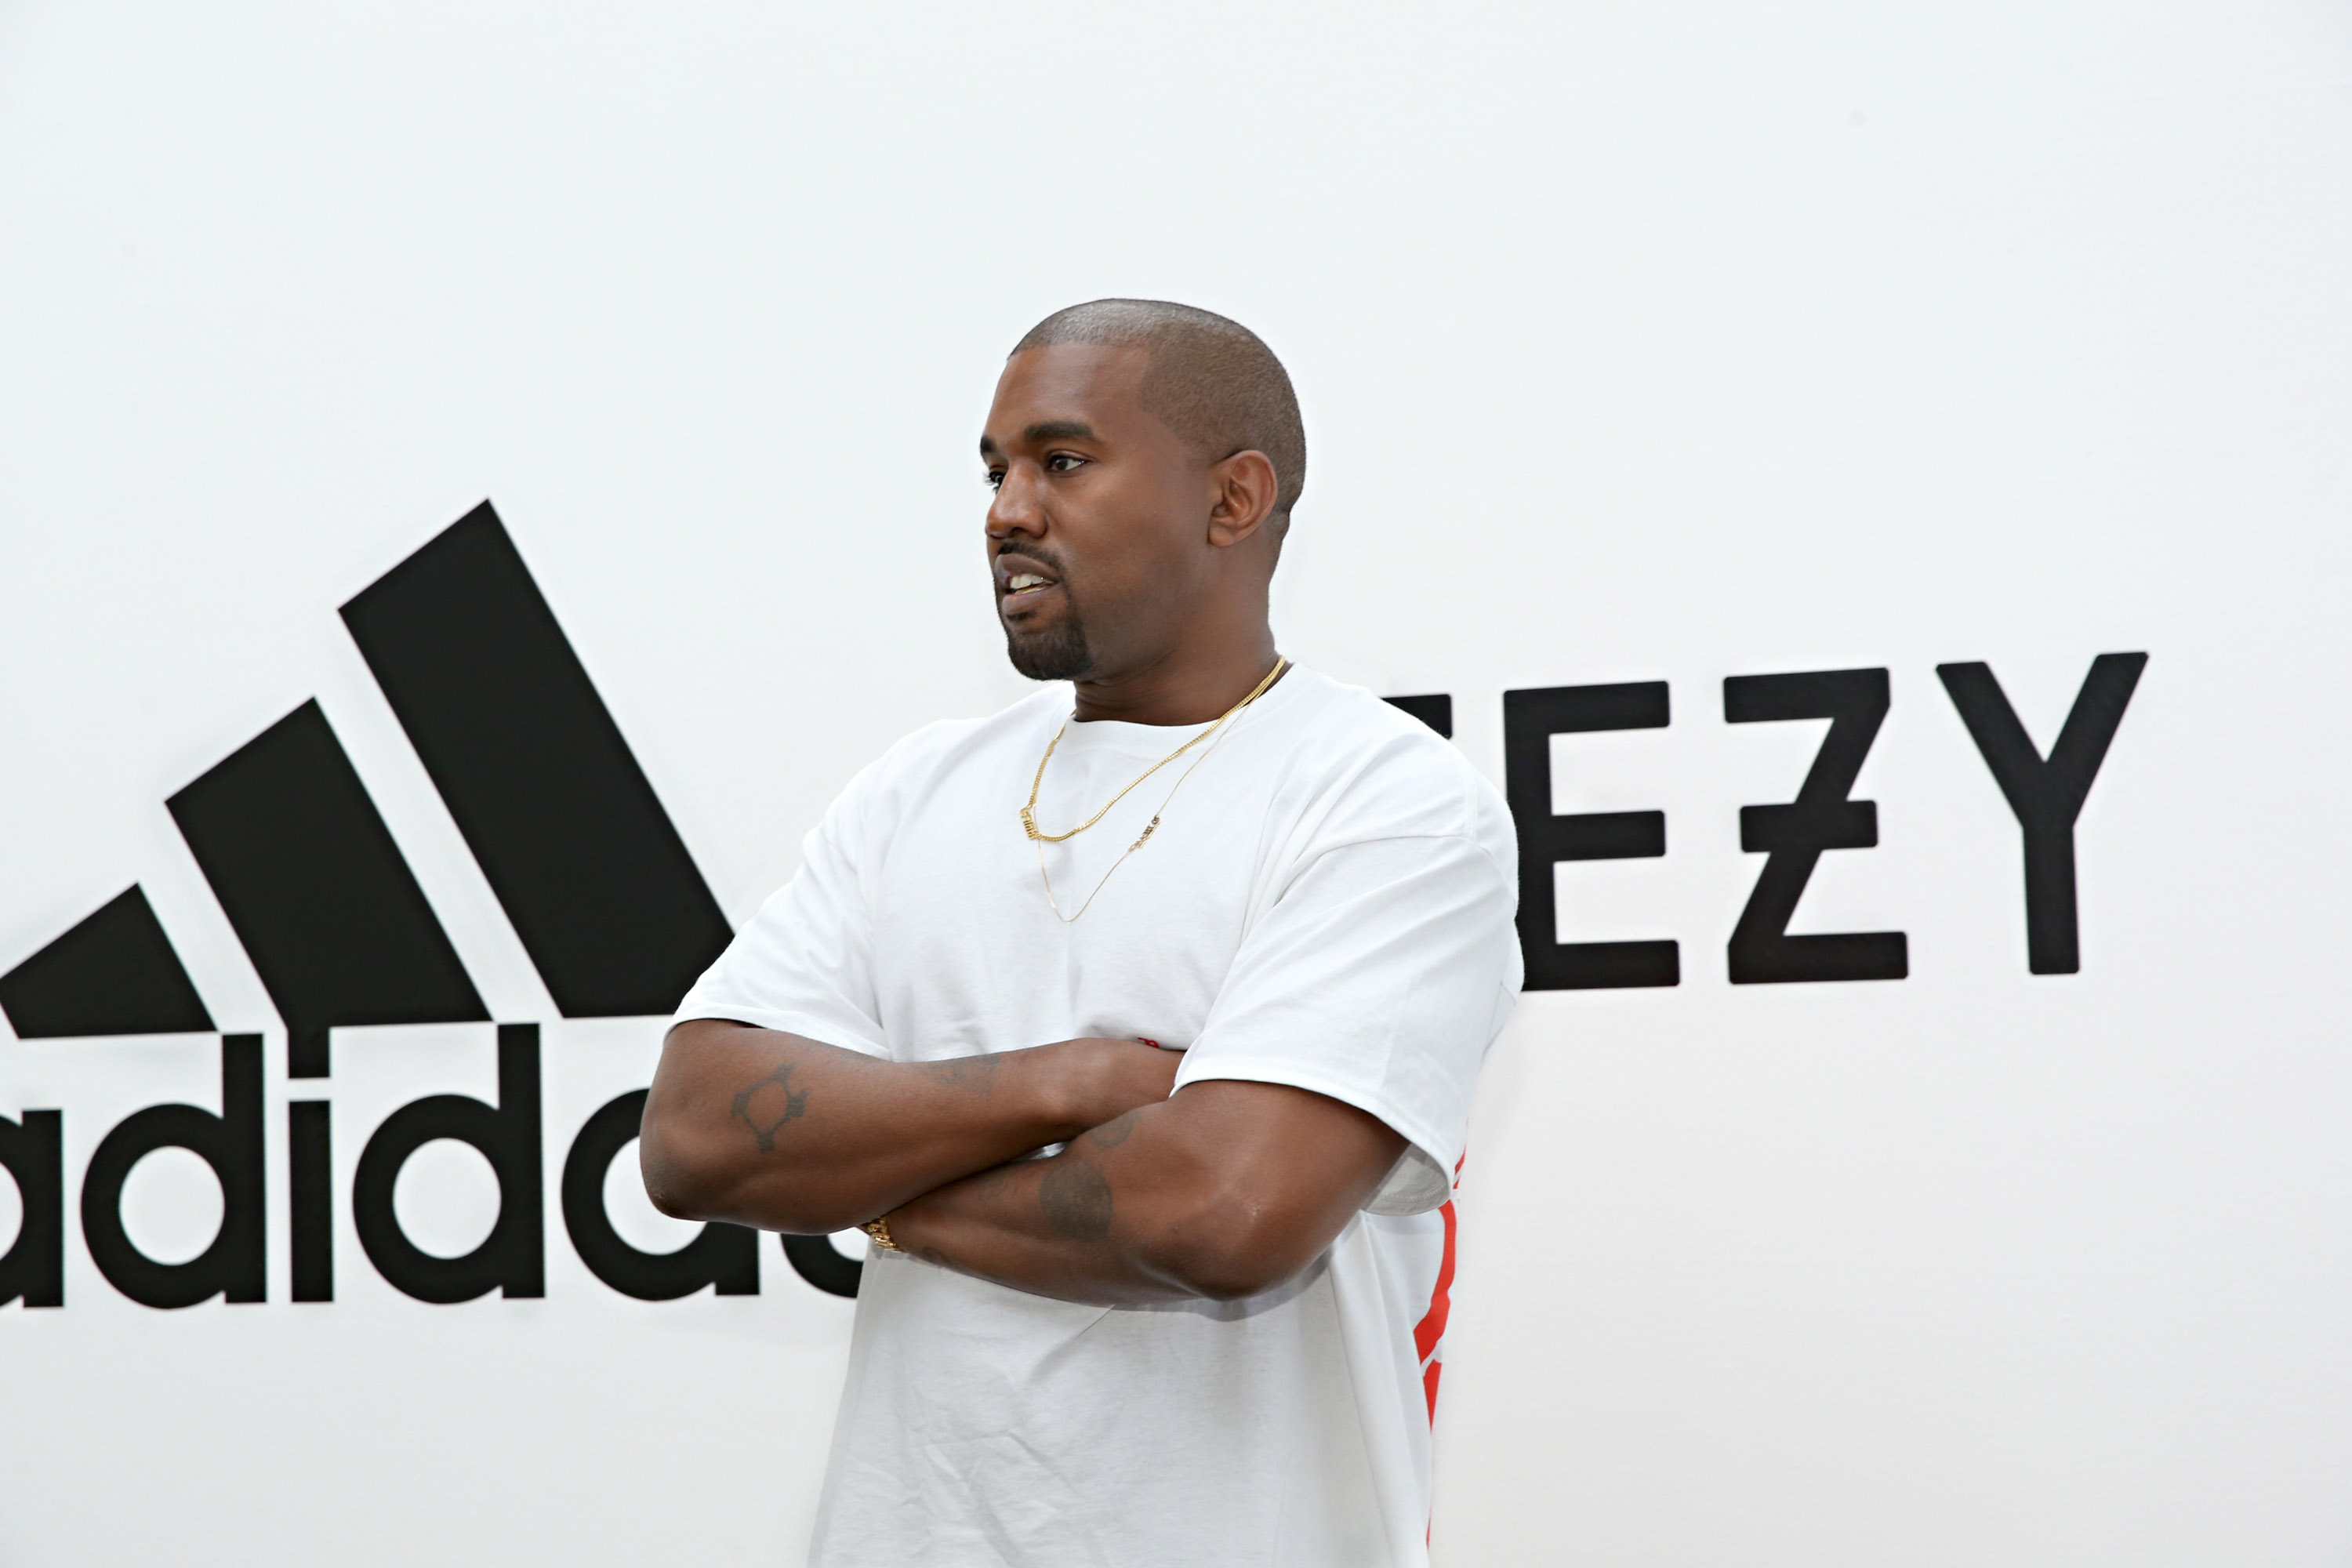 Adidas Yeezy Basketball QNTM Set To Restock: Details